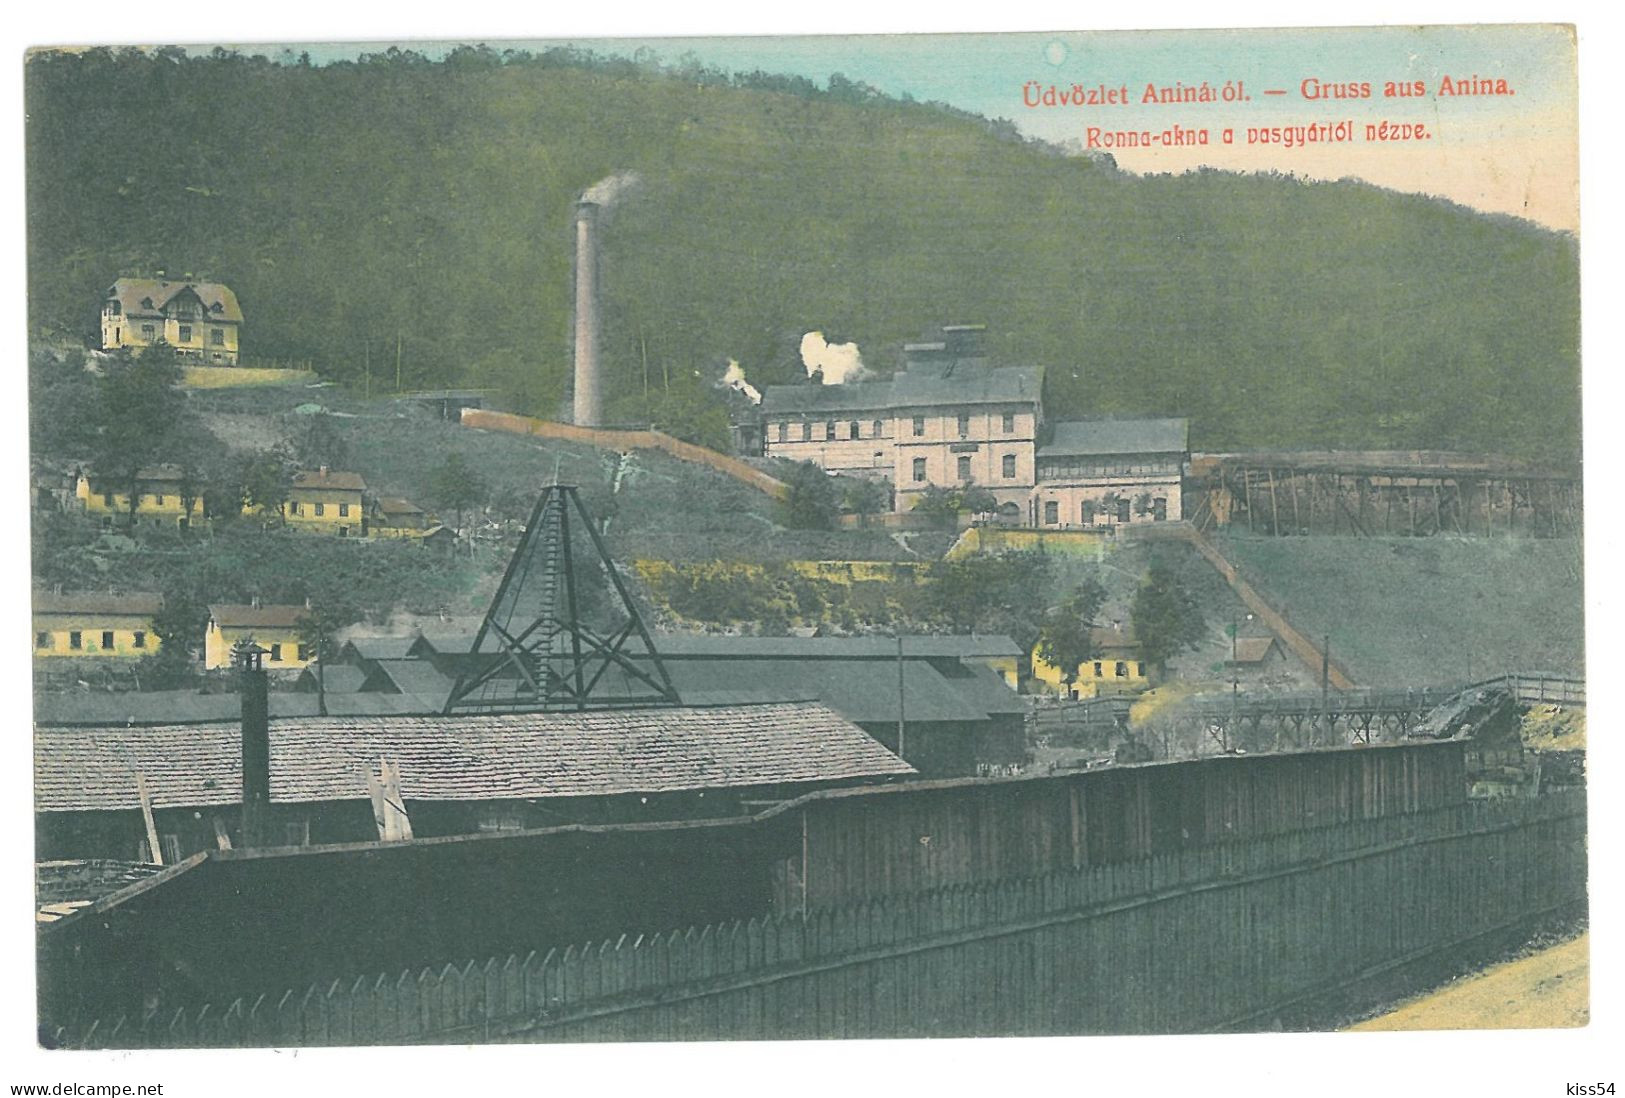 RO - 25402 ANINA, Caras Severin, Mining Industry, Romania - Old Postcard - Unused - Romania